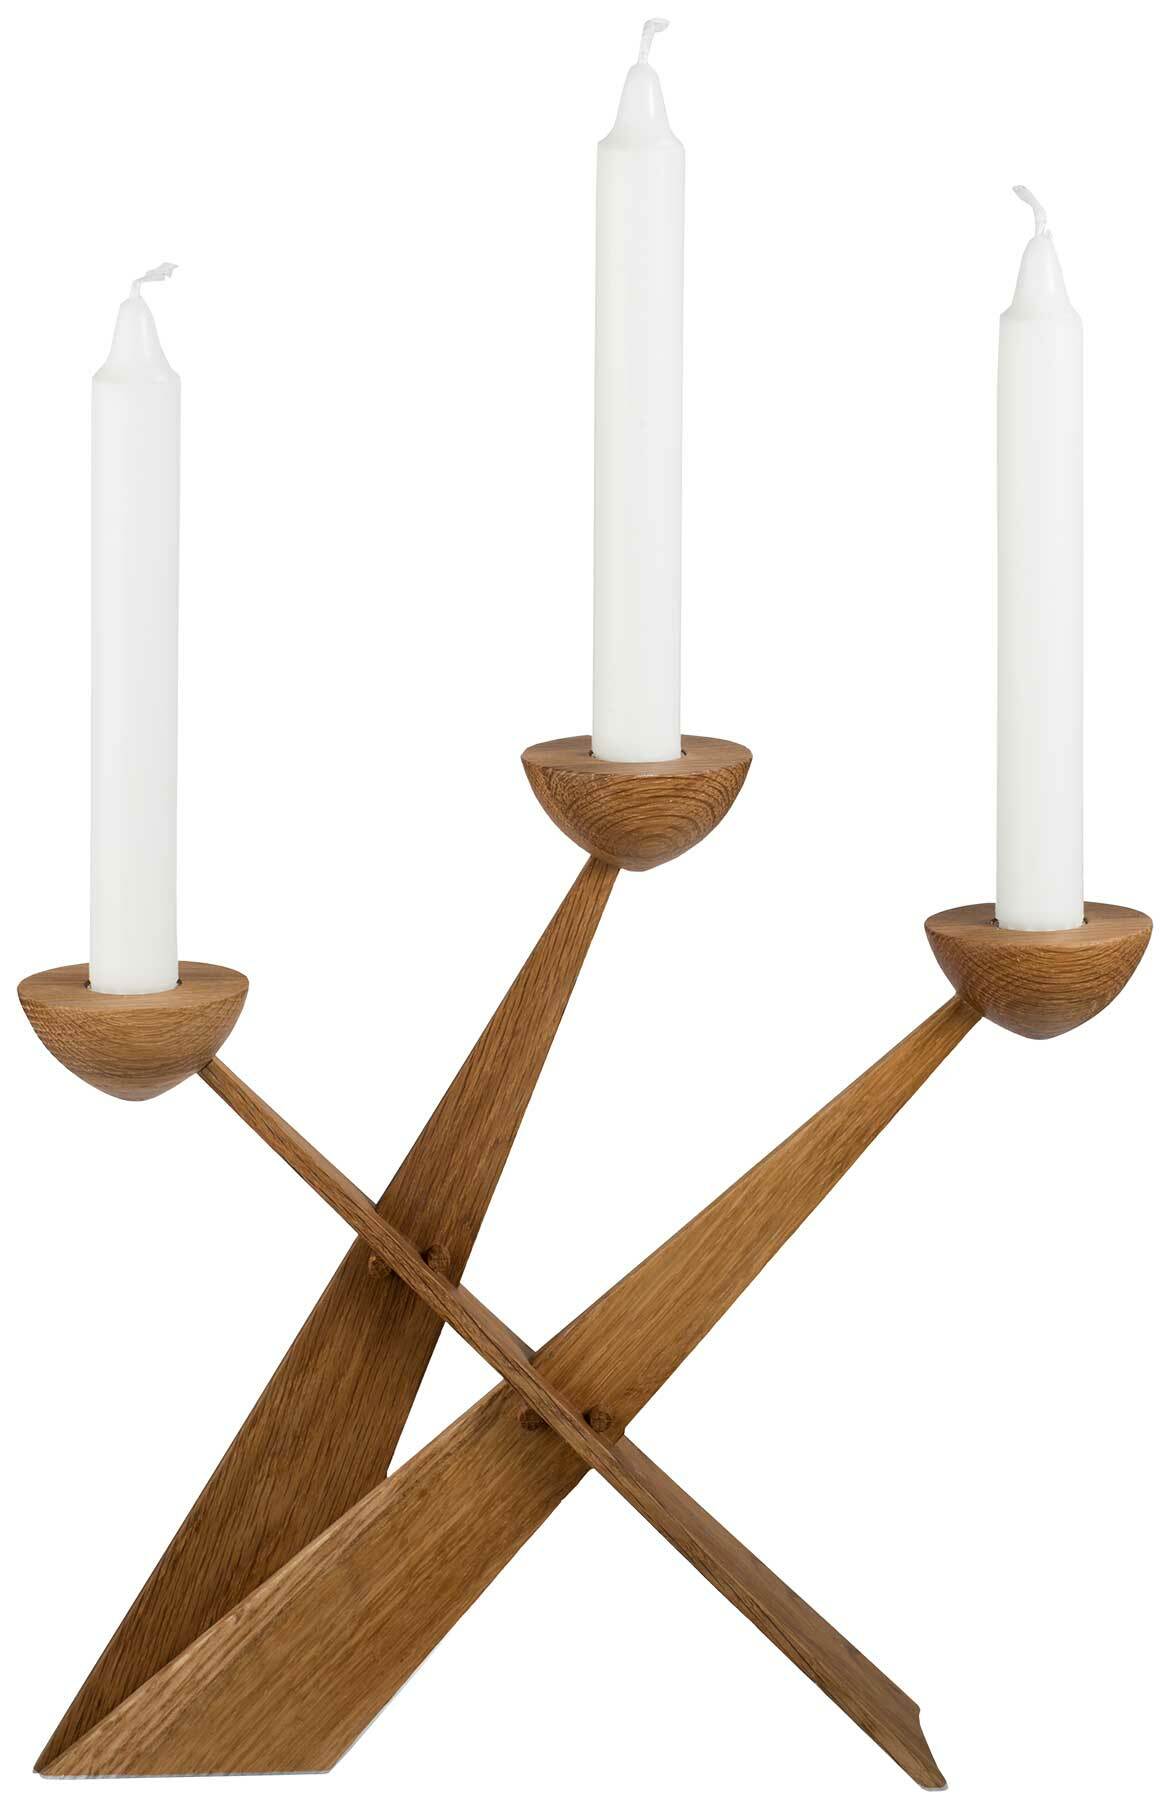 Chandelier "Candletree" (sans bougies), version bois de chêne von Spring Copenhagen